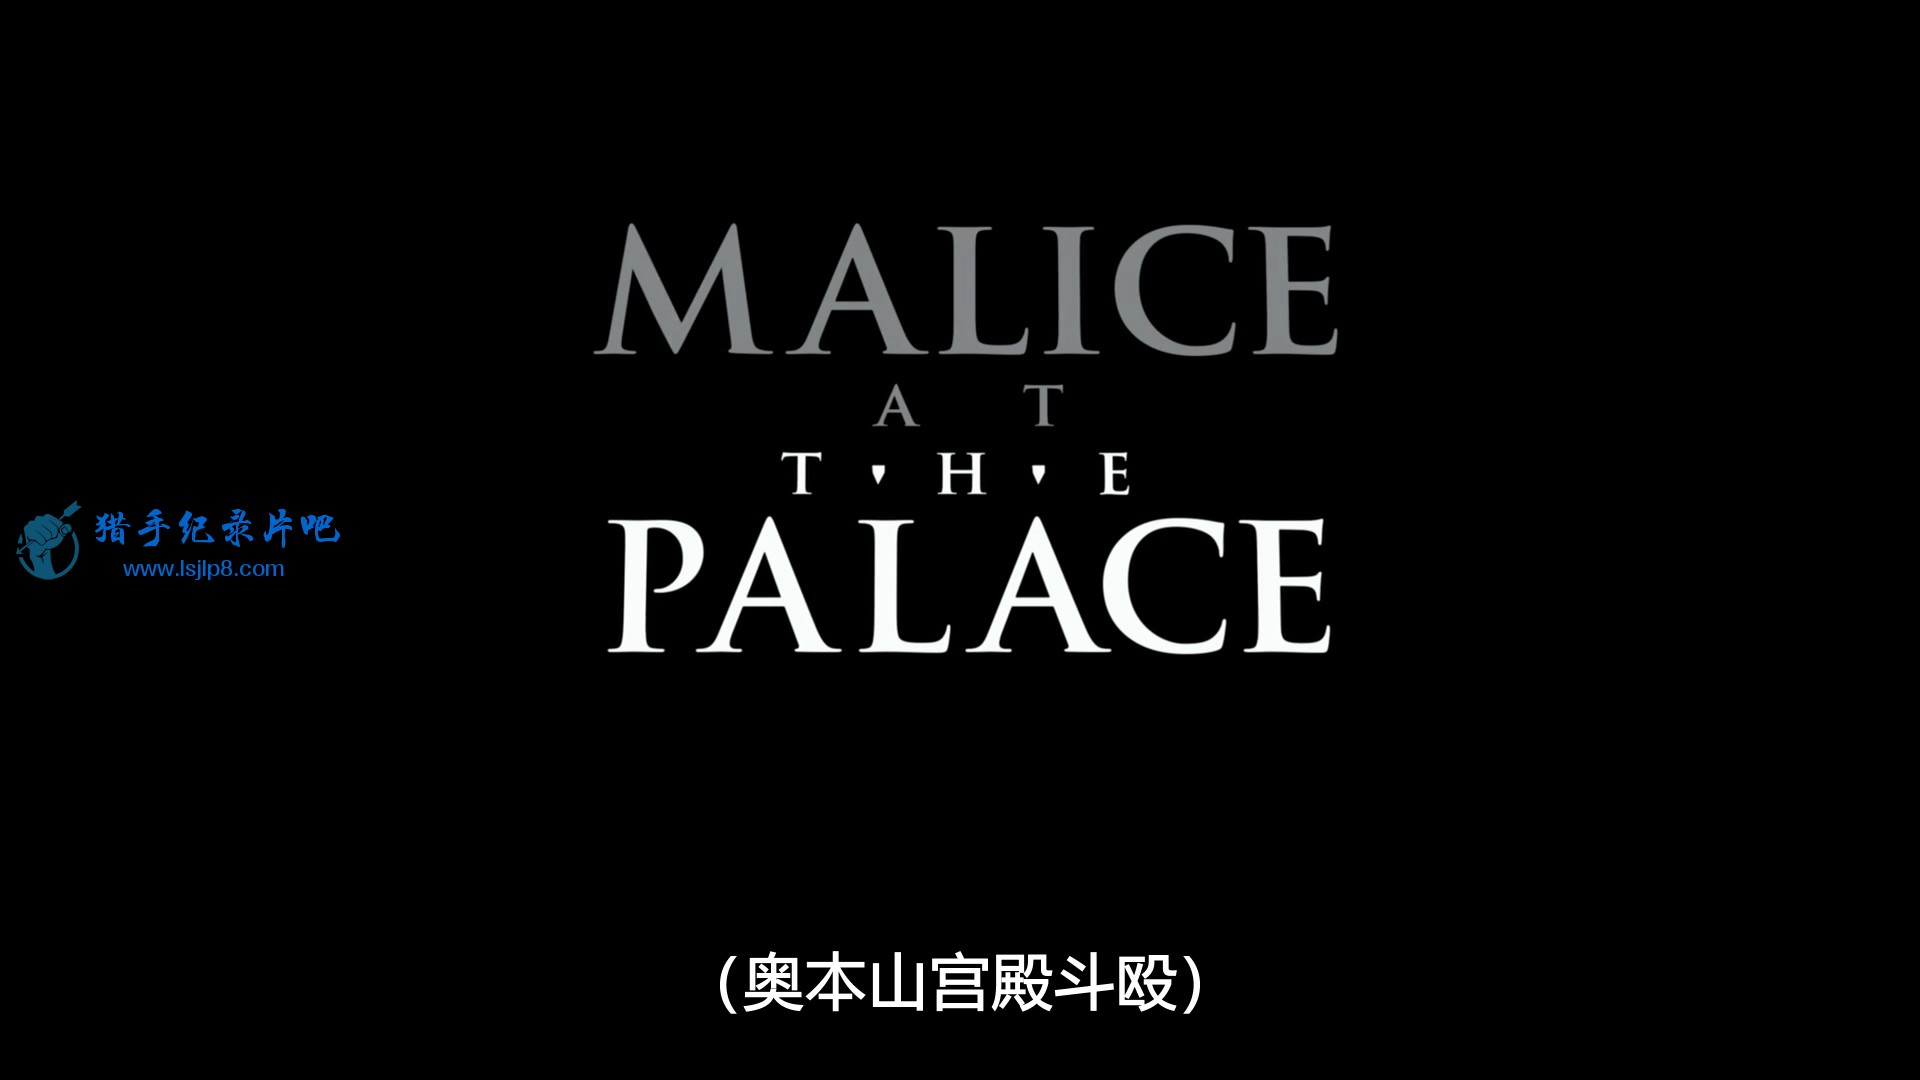 Untold.Malice.at.the.Palace.2021.1080p.NF.WEB-DL.DDP5.1.x264-TEPES.mkv_20210817_.jpg